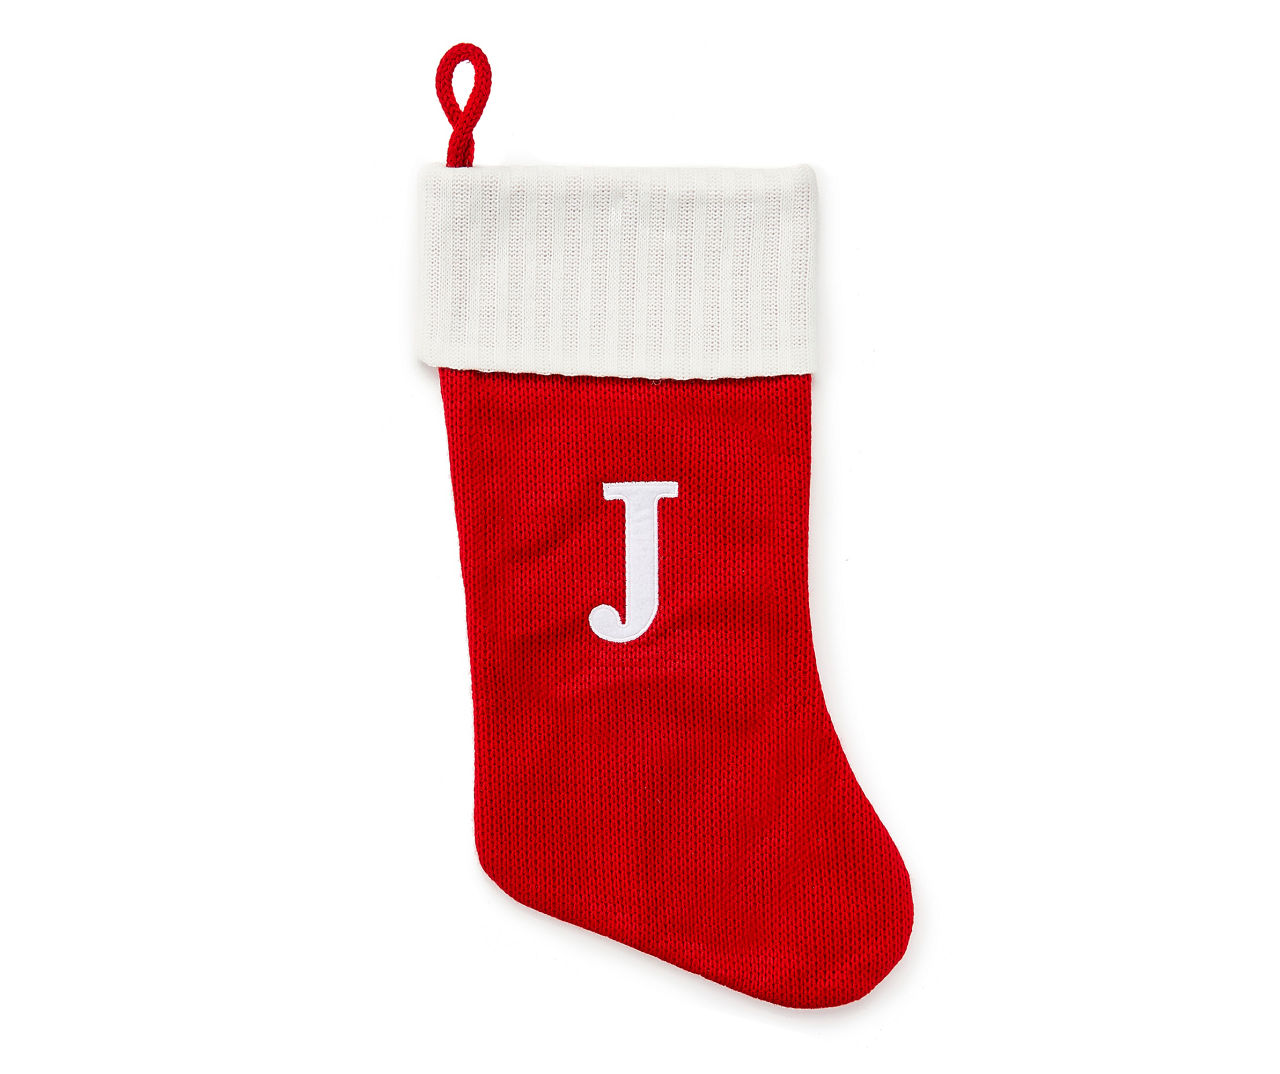 "J" Monogram Red Knit Stocking with White Trim